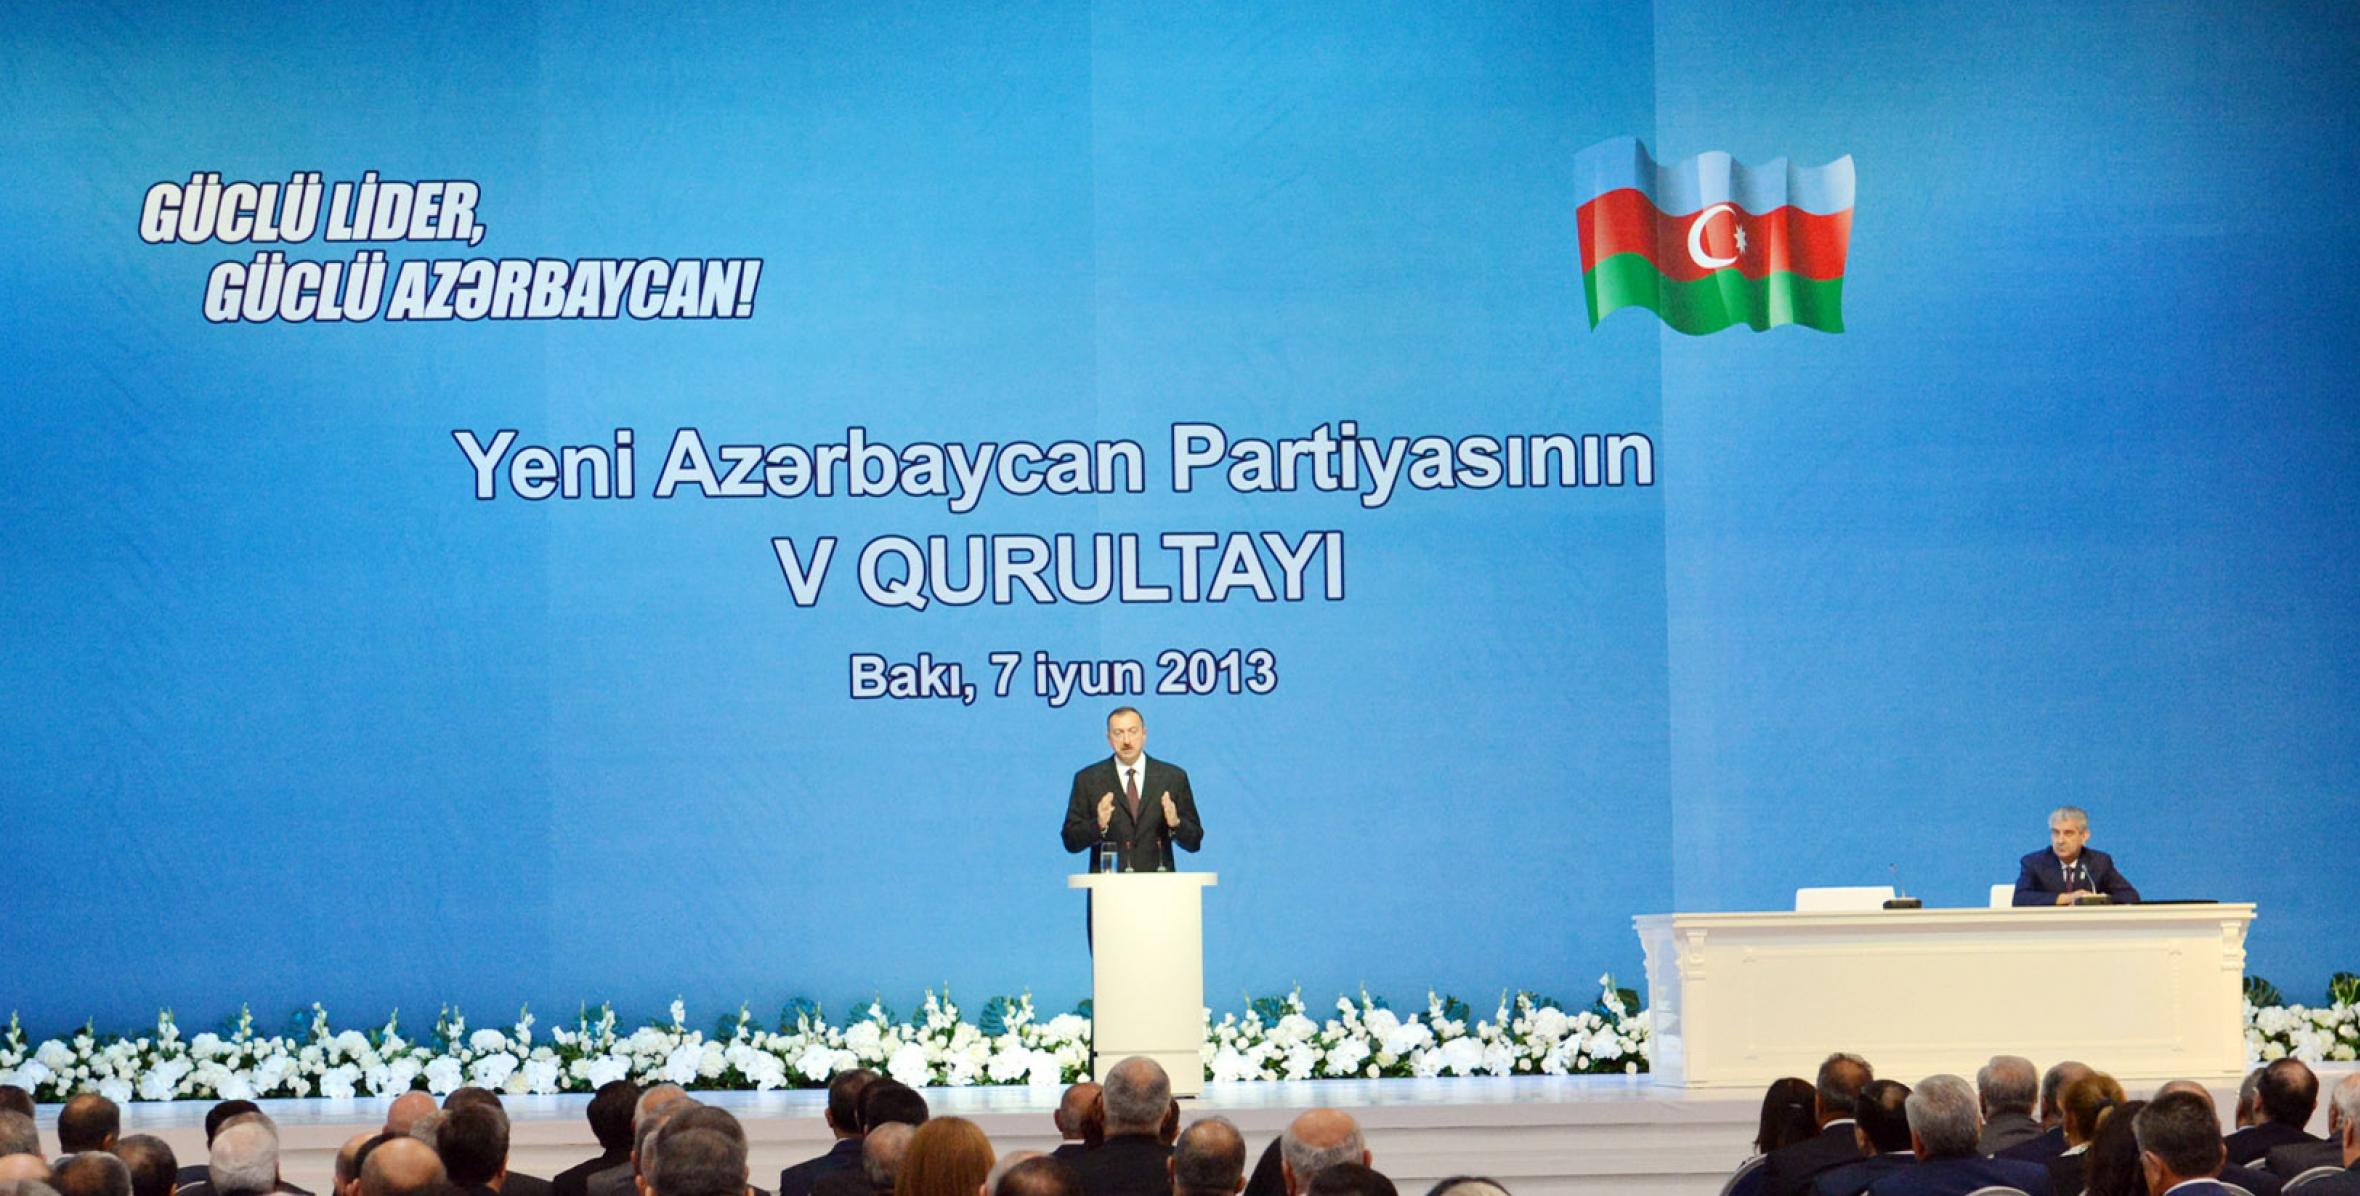 V съезд партии «Ени Азербайджан» выдвинул кандидатуру председателя партии, Президента Азербайджана Ильхама Алиева на предстоящих в октябре 2013 года президентских выборах